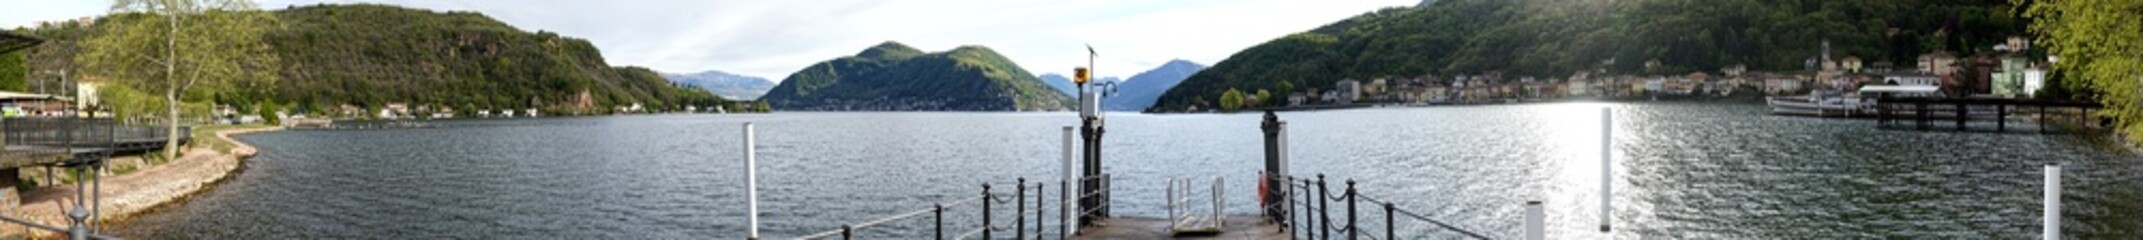 Panorama picture of Lake Lugano with Porto Ceresio and Morcote.